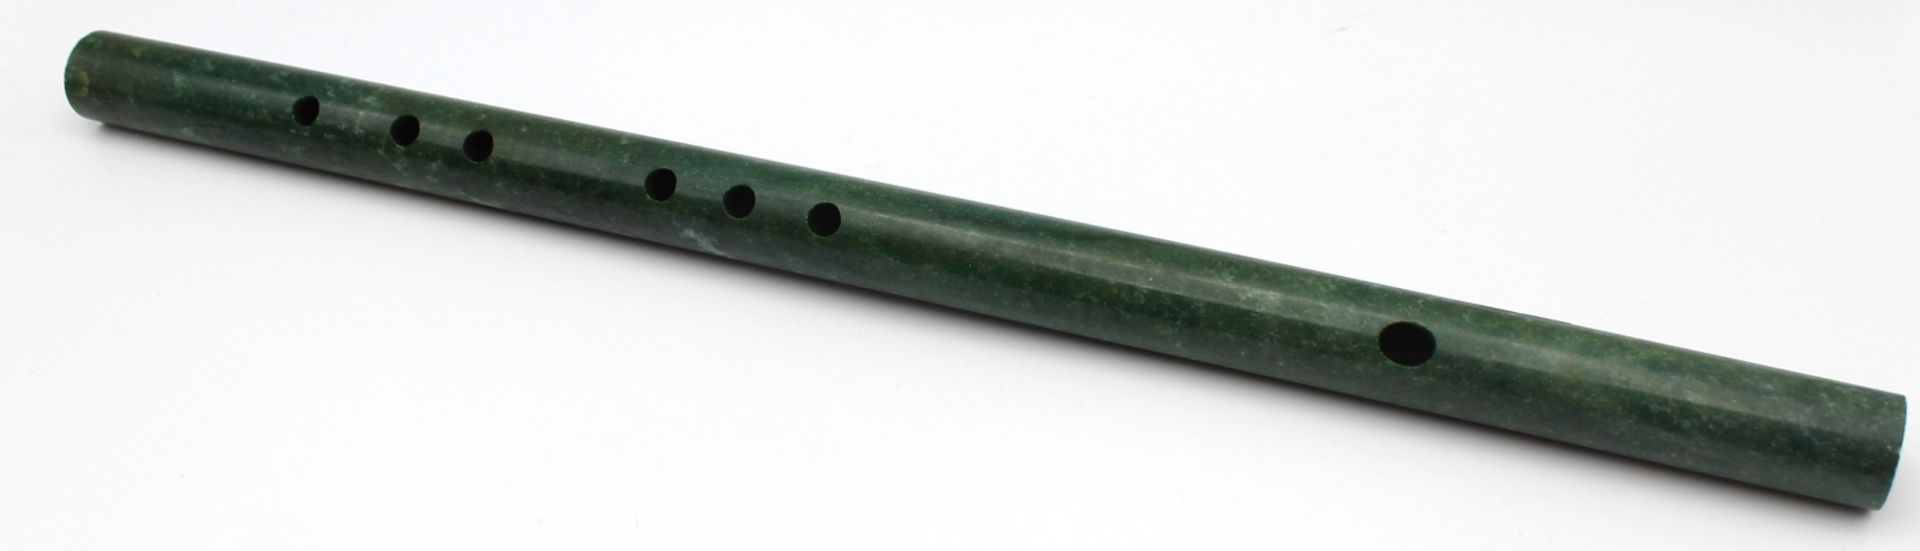 Musikinstrument - wohl China Flöte, Jade, Länge ca. 38,5 cm- - -25.00 % buyer's premium on the